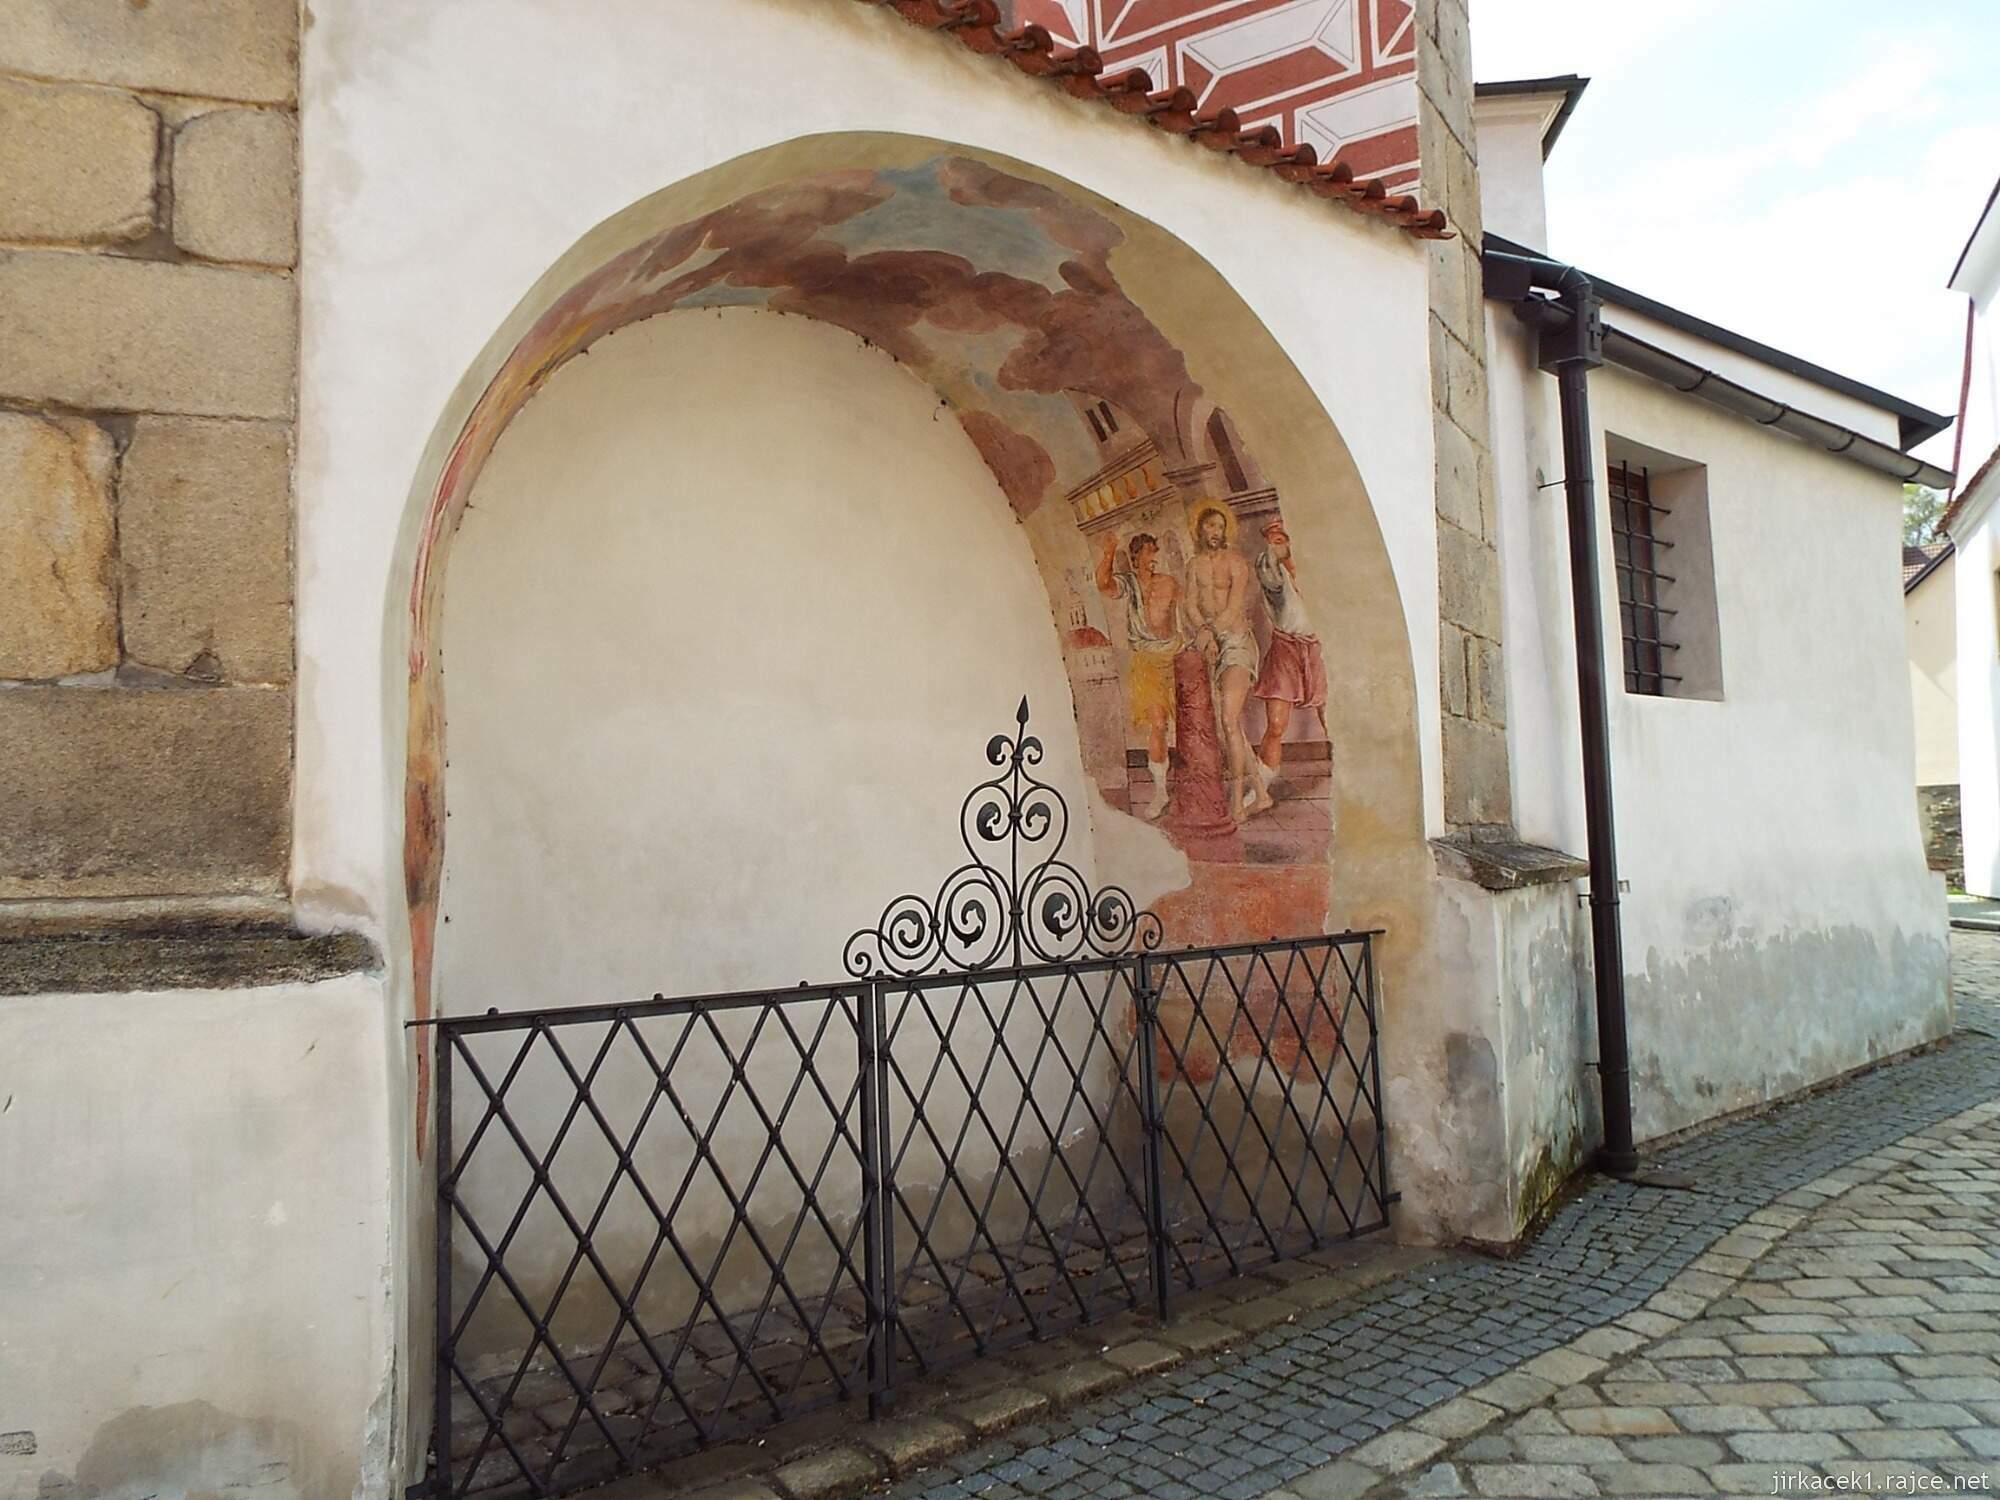 H - Pelhřimov - Kostel sv. Bartoloměje 07 - výklenky ve zdi s freskami Kalvárie